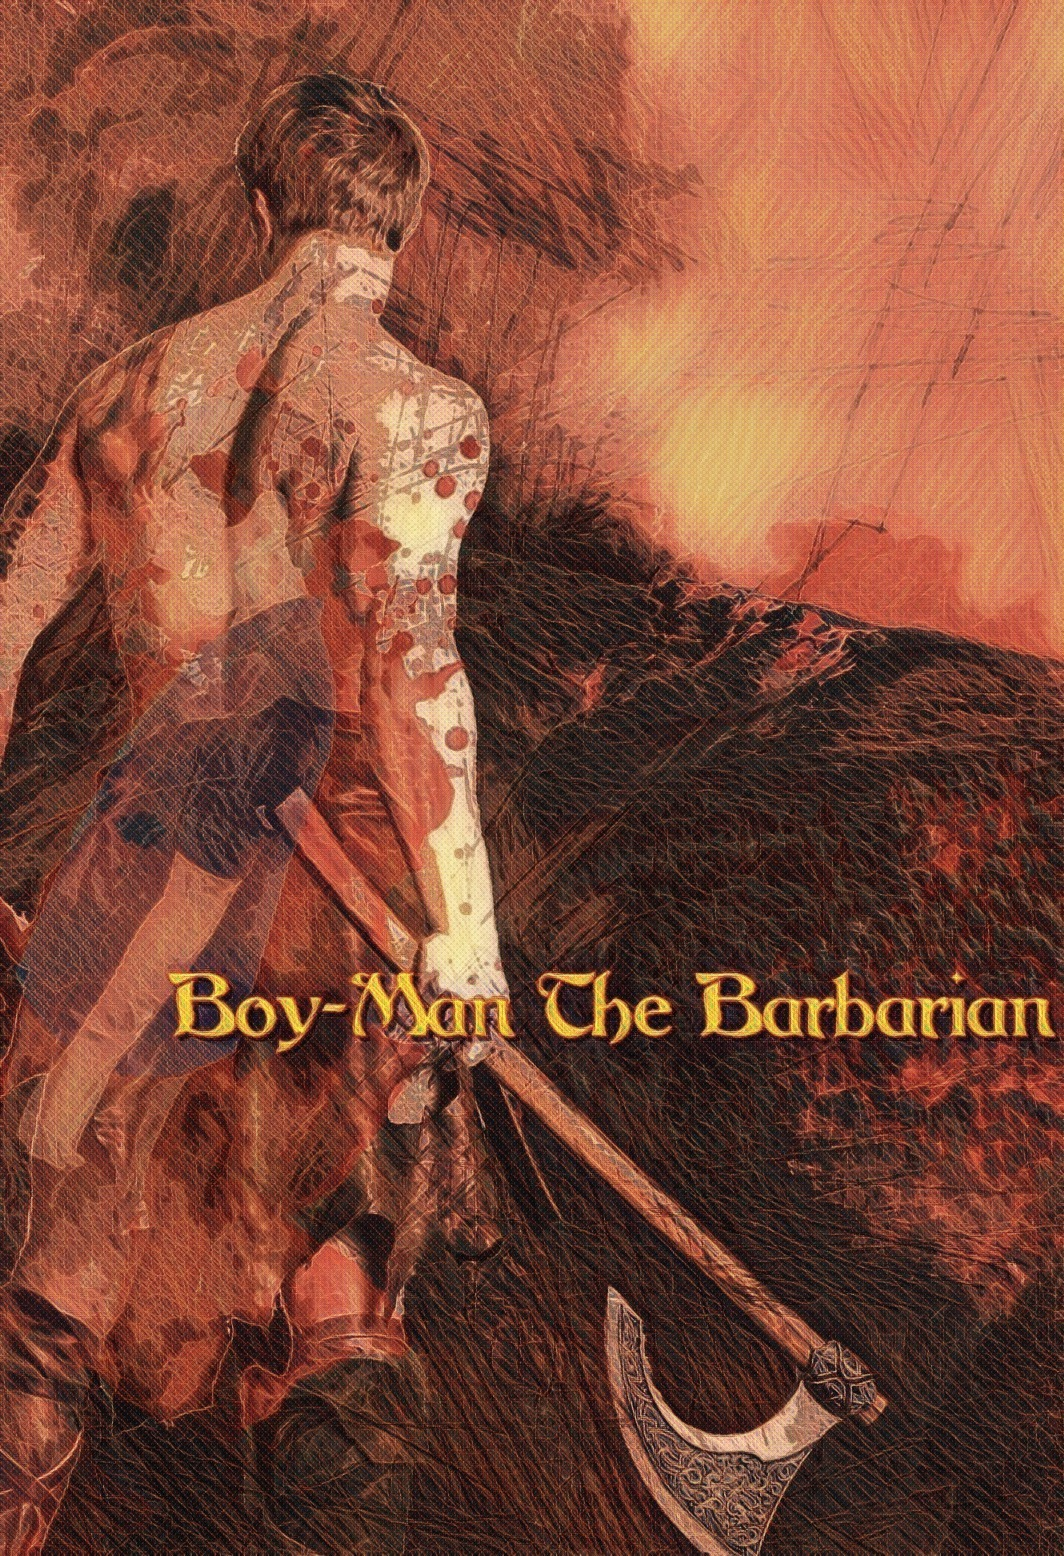 BOY-MAN THE BARBARIAN